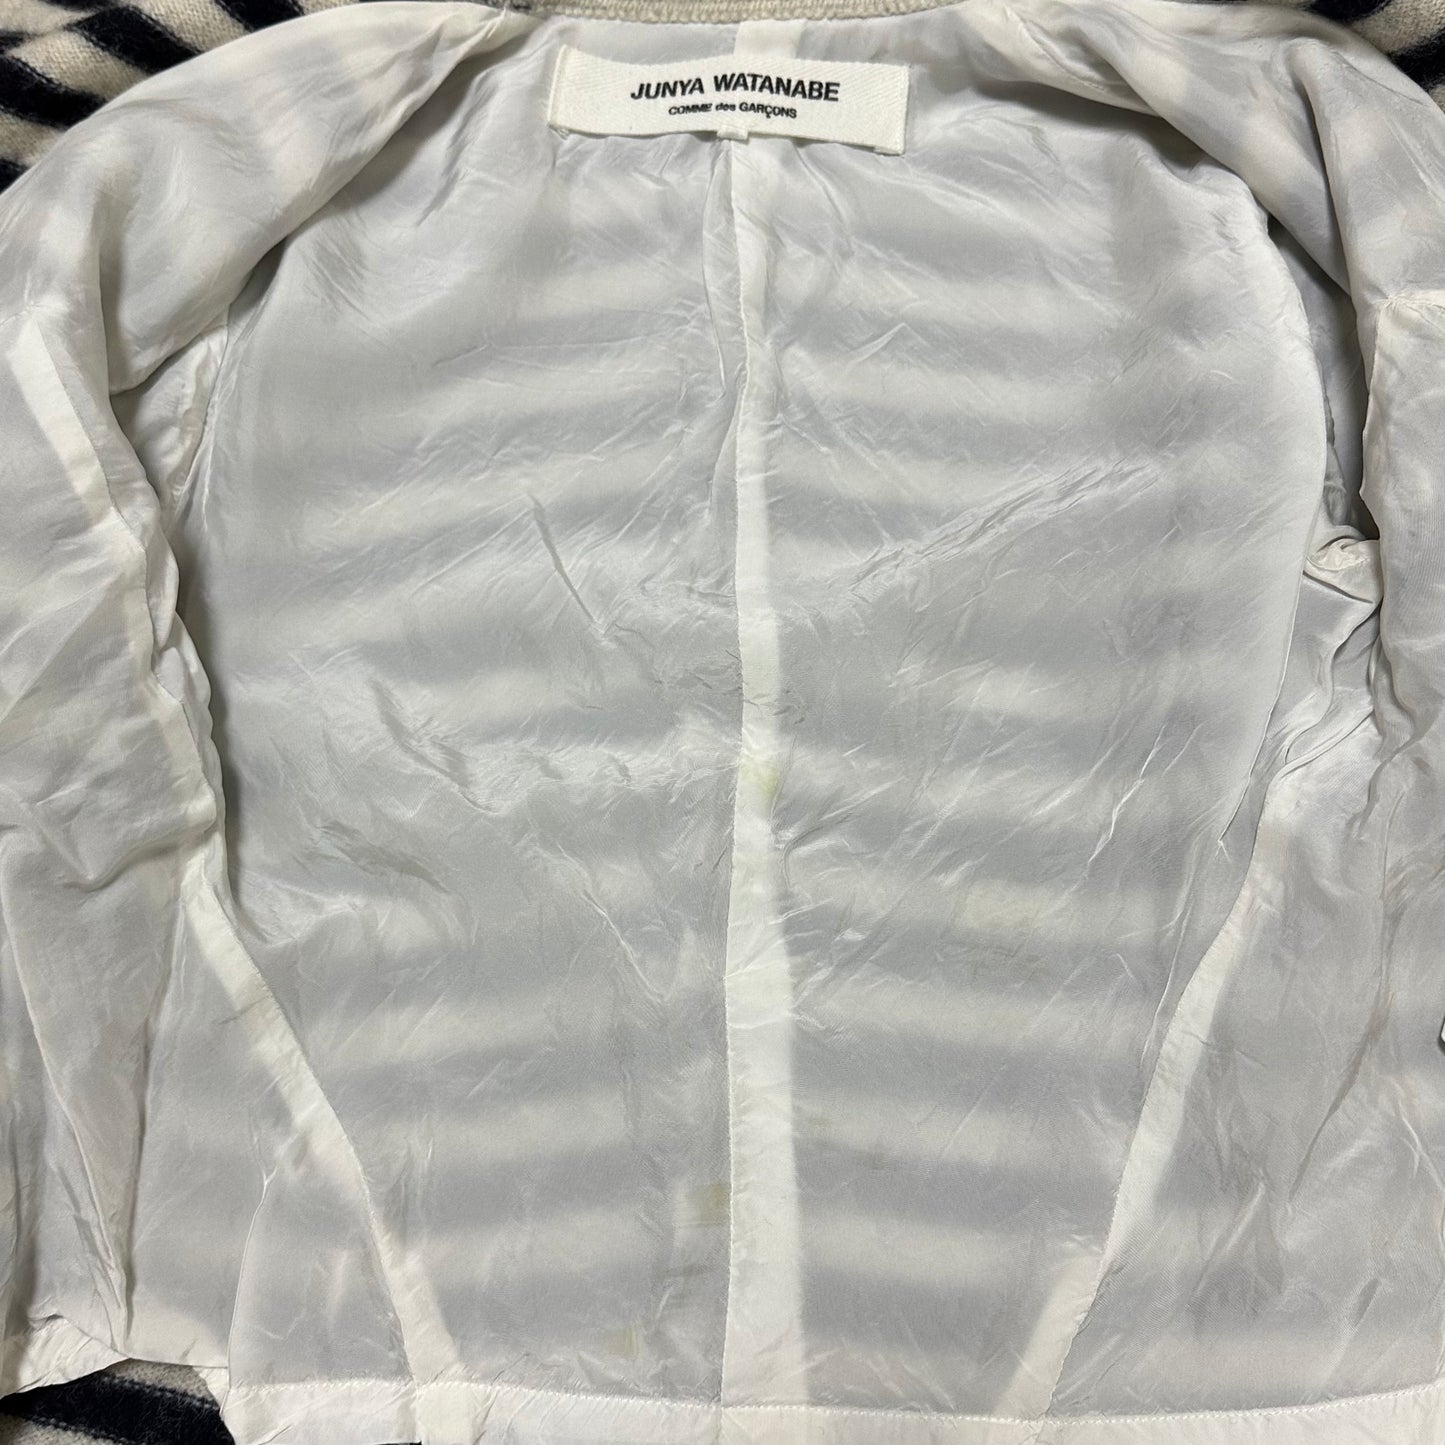 JUNYA WATANABE Fall Winter 2003 Striped Button Up Blazer Jacket